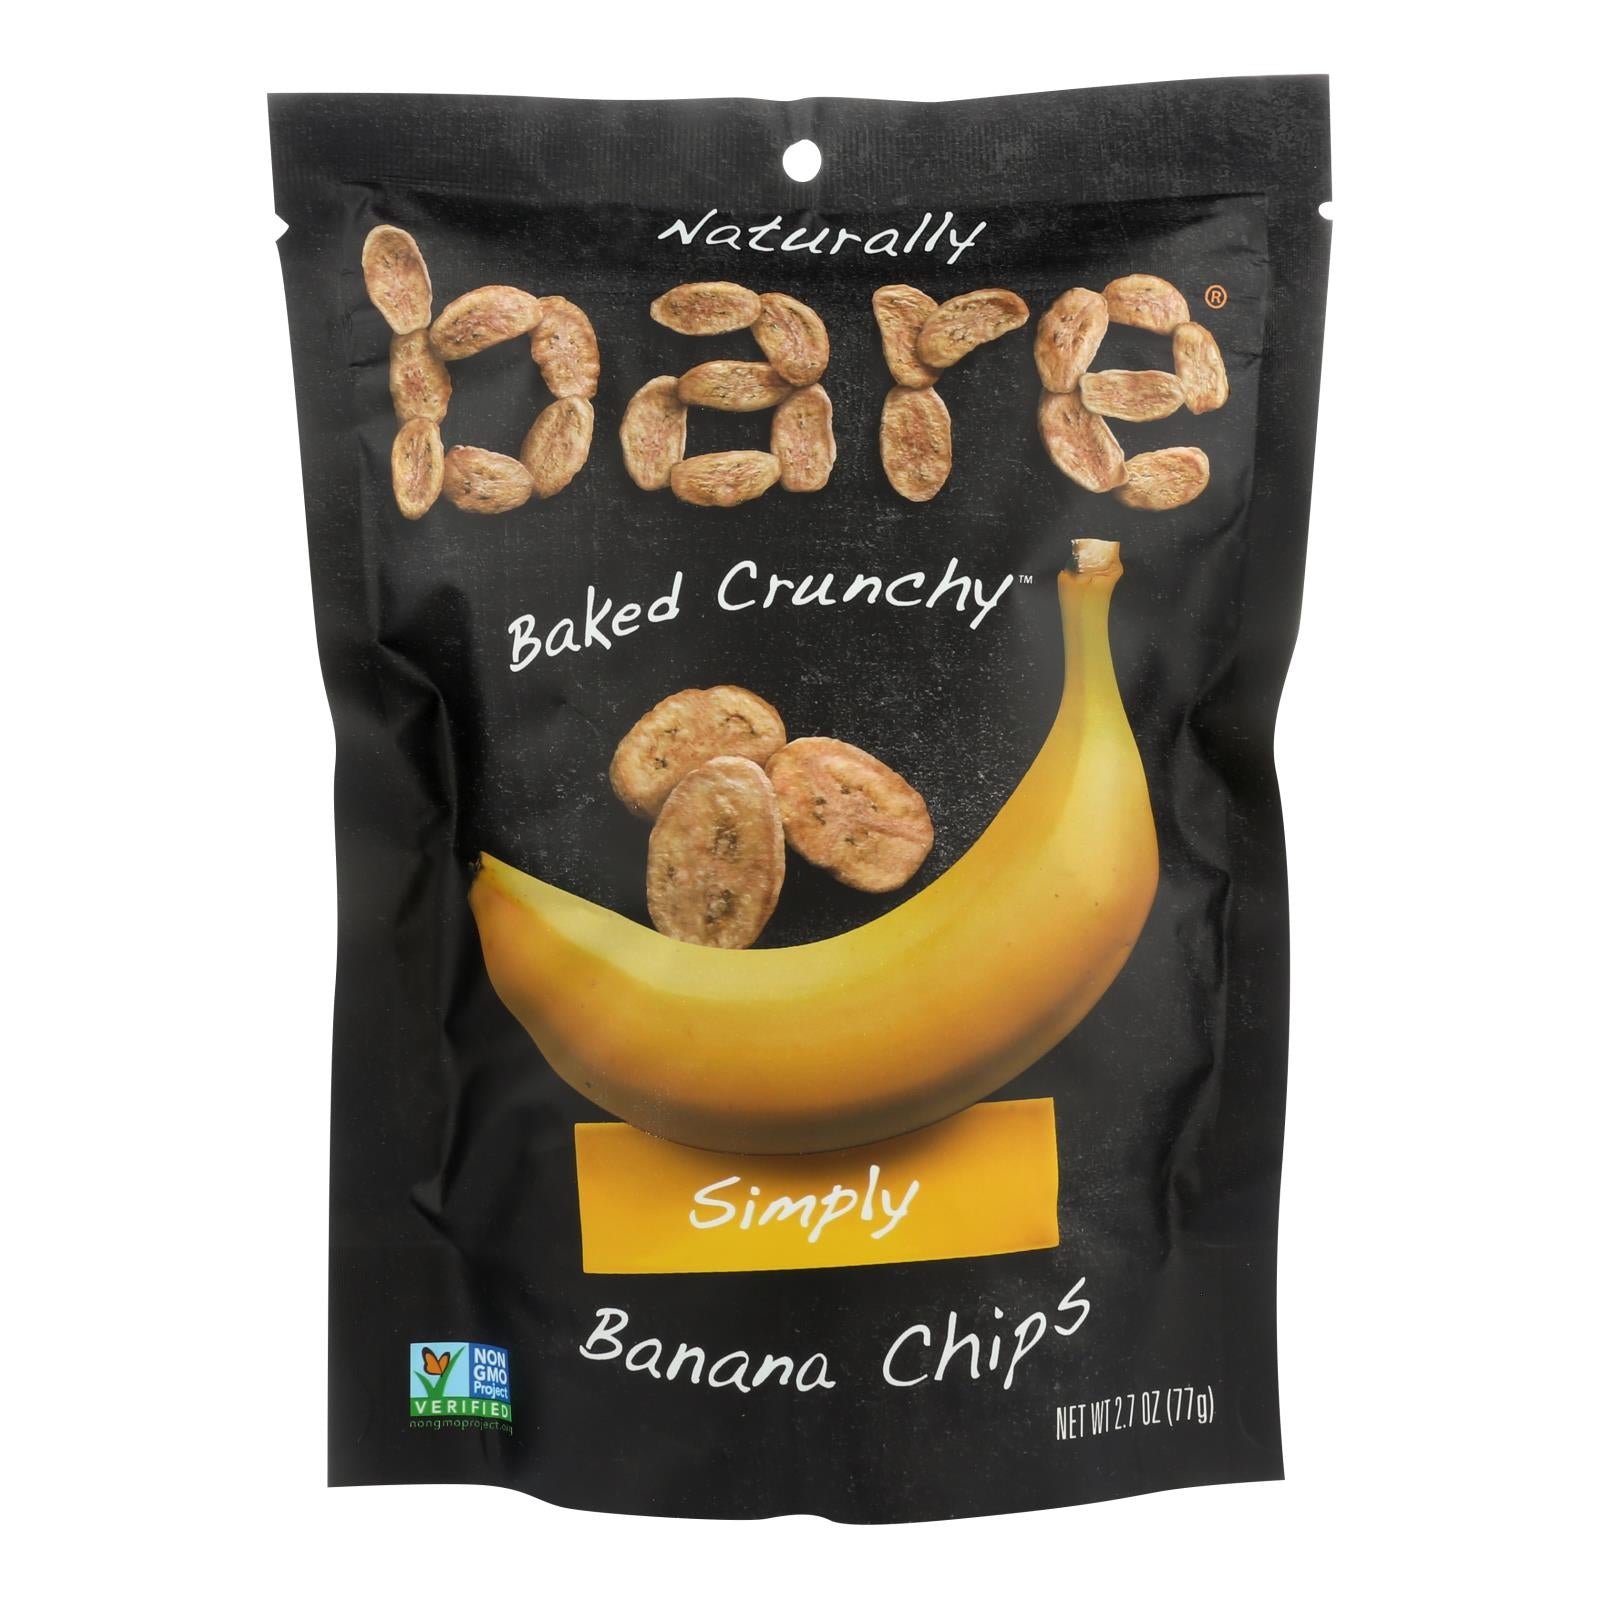 Bare Fruit, Bare Fruit Bare Fruit Bare Fruit Banana Chip - Case of 12 - 2.7 oz. (Pack of 12)